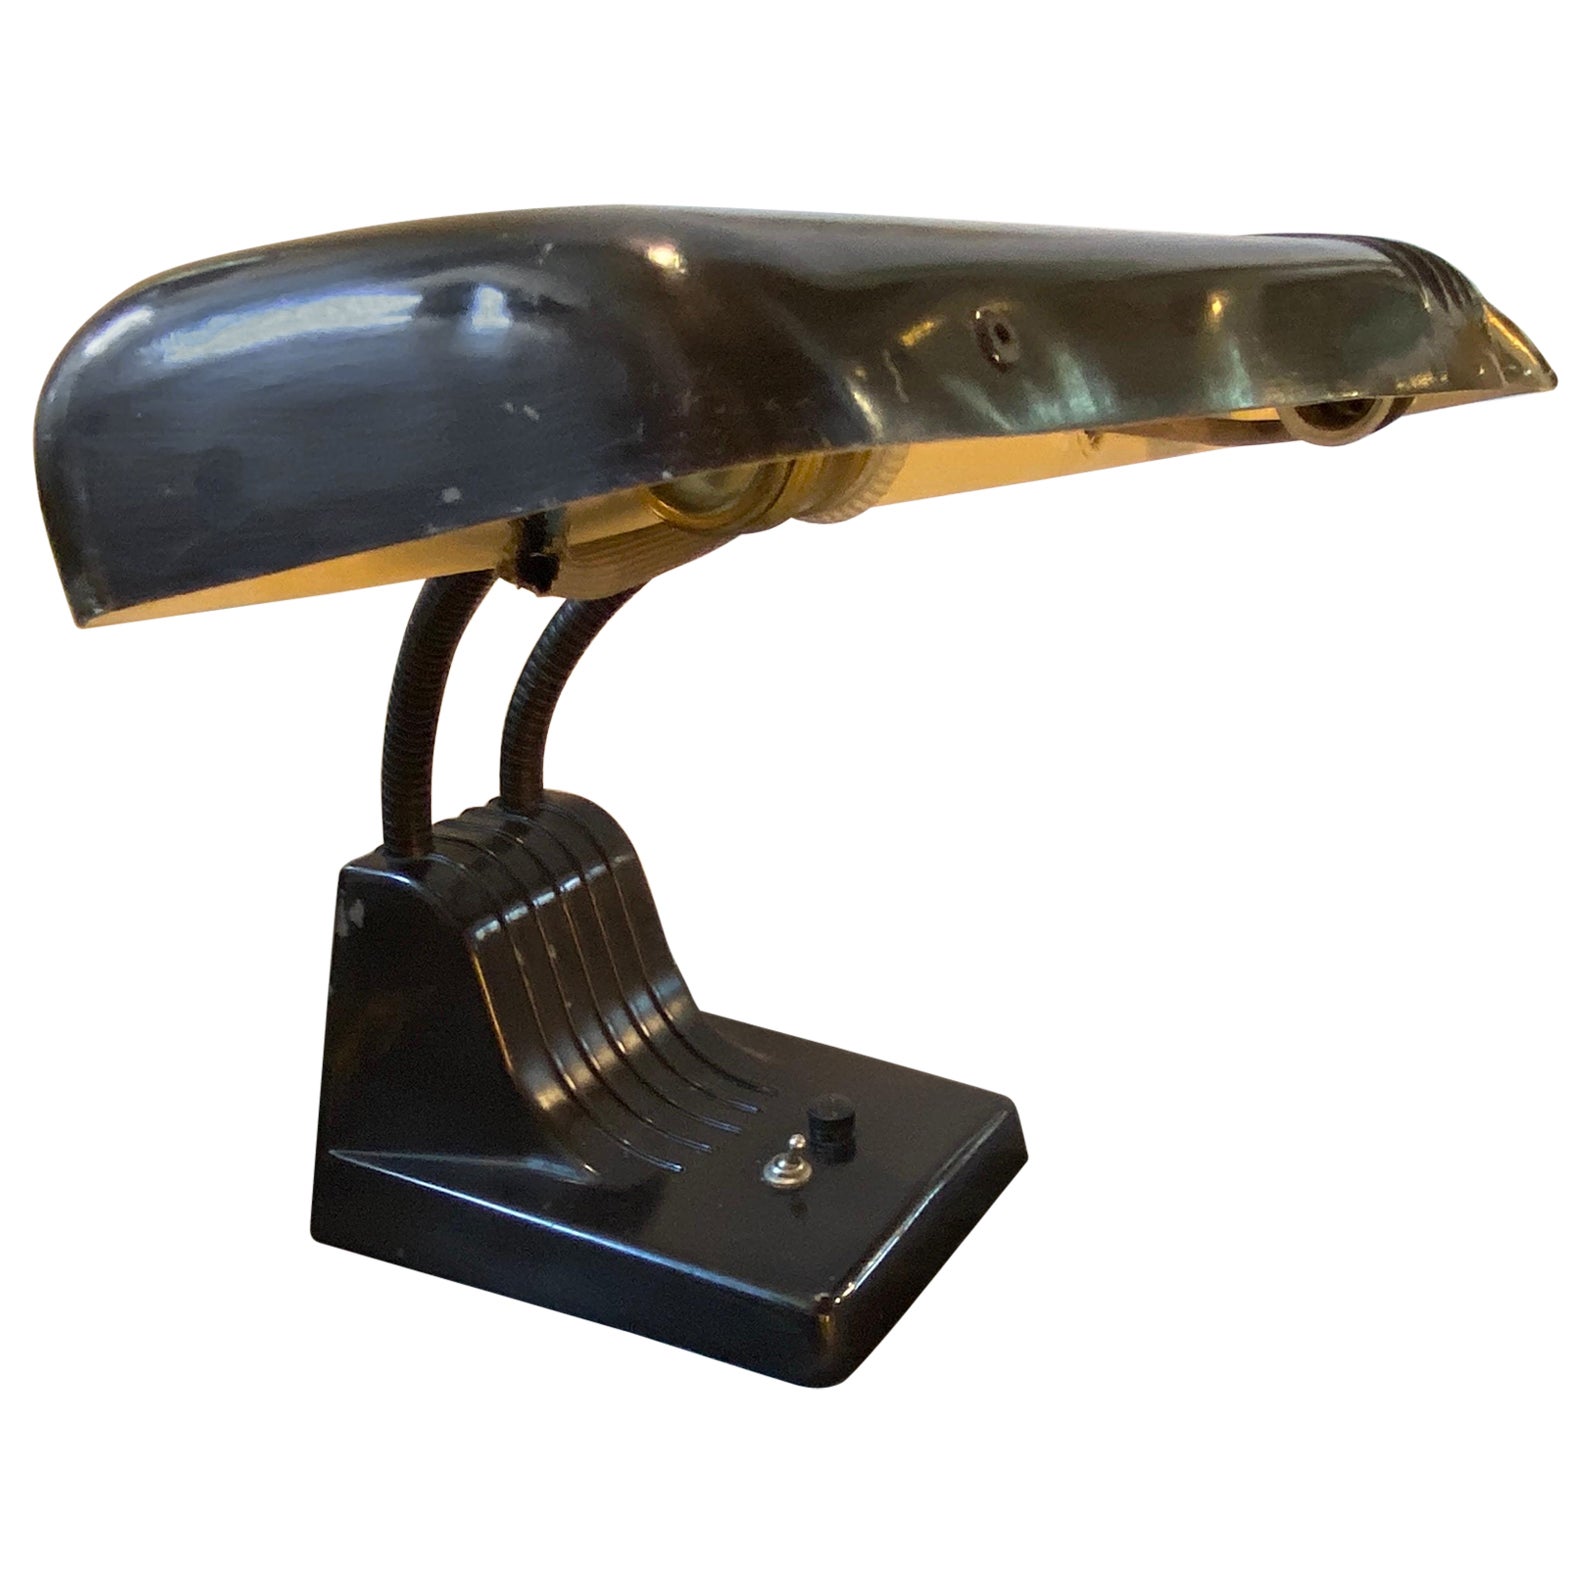 1960s Industrial American Metal Desk Lamp by Dazor